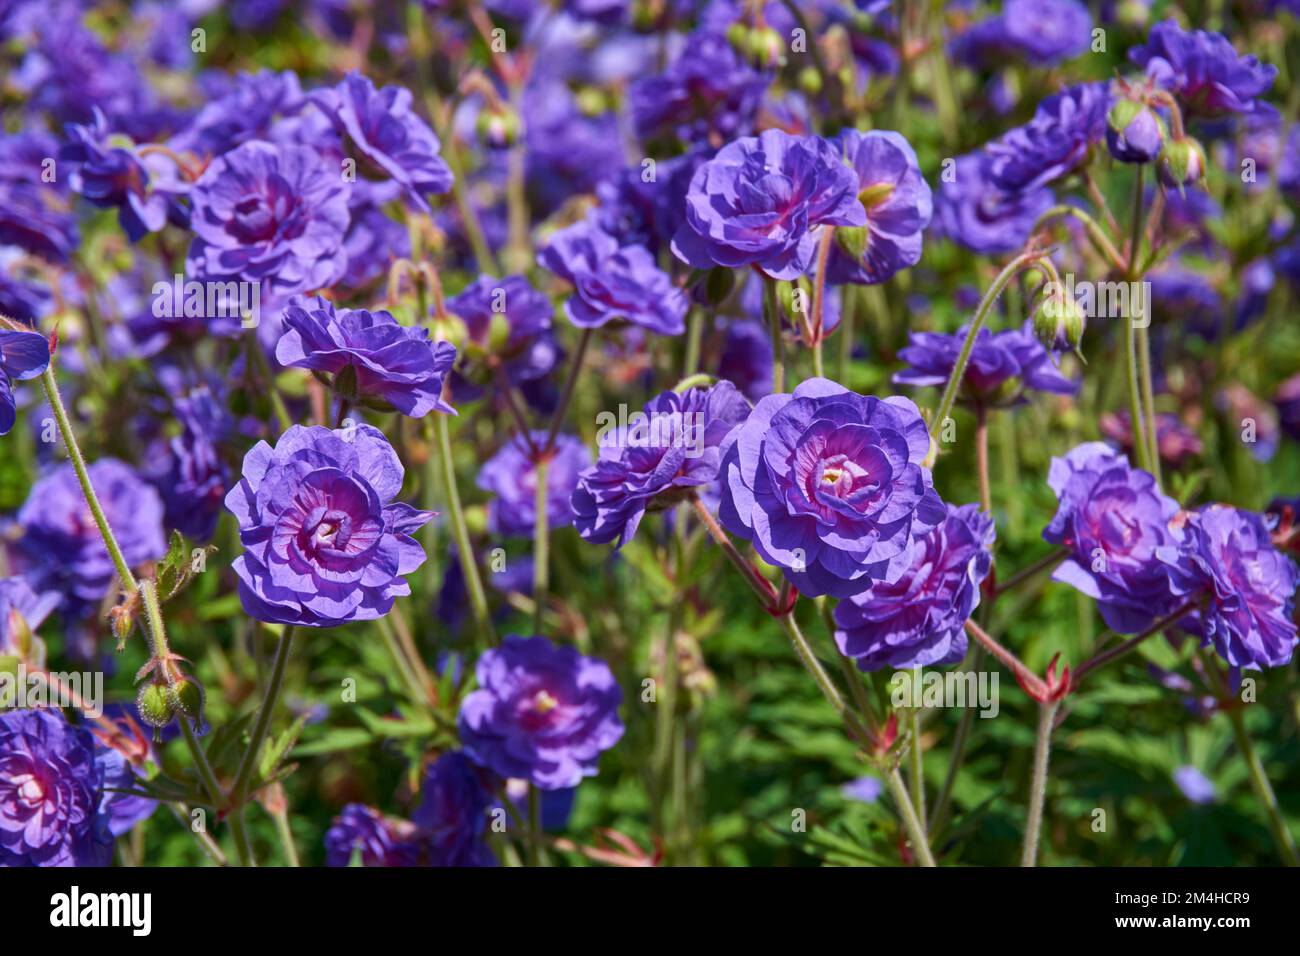 Fiori viola doppi di geranio perenne erbaceo pratense 'Plenum Violaceum'. Foto Stock